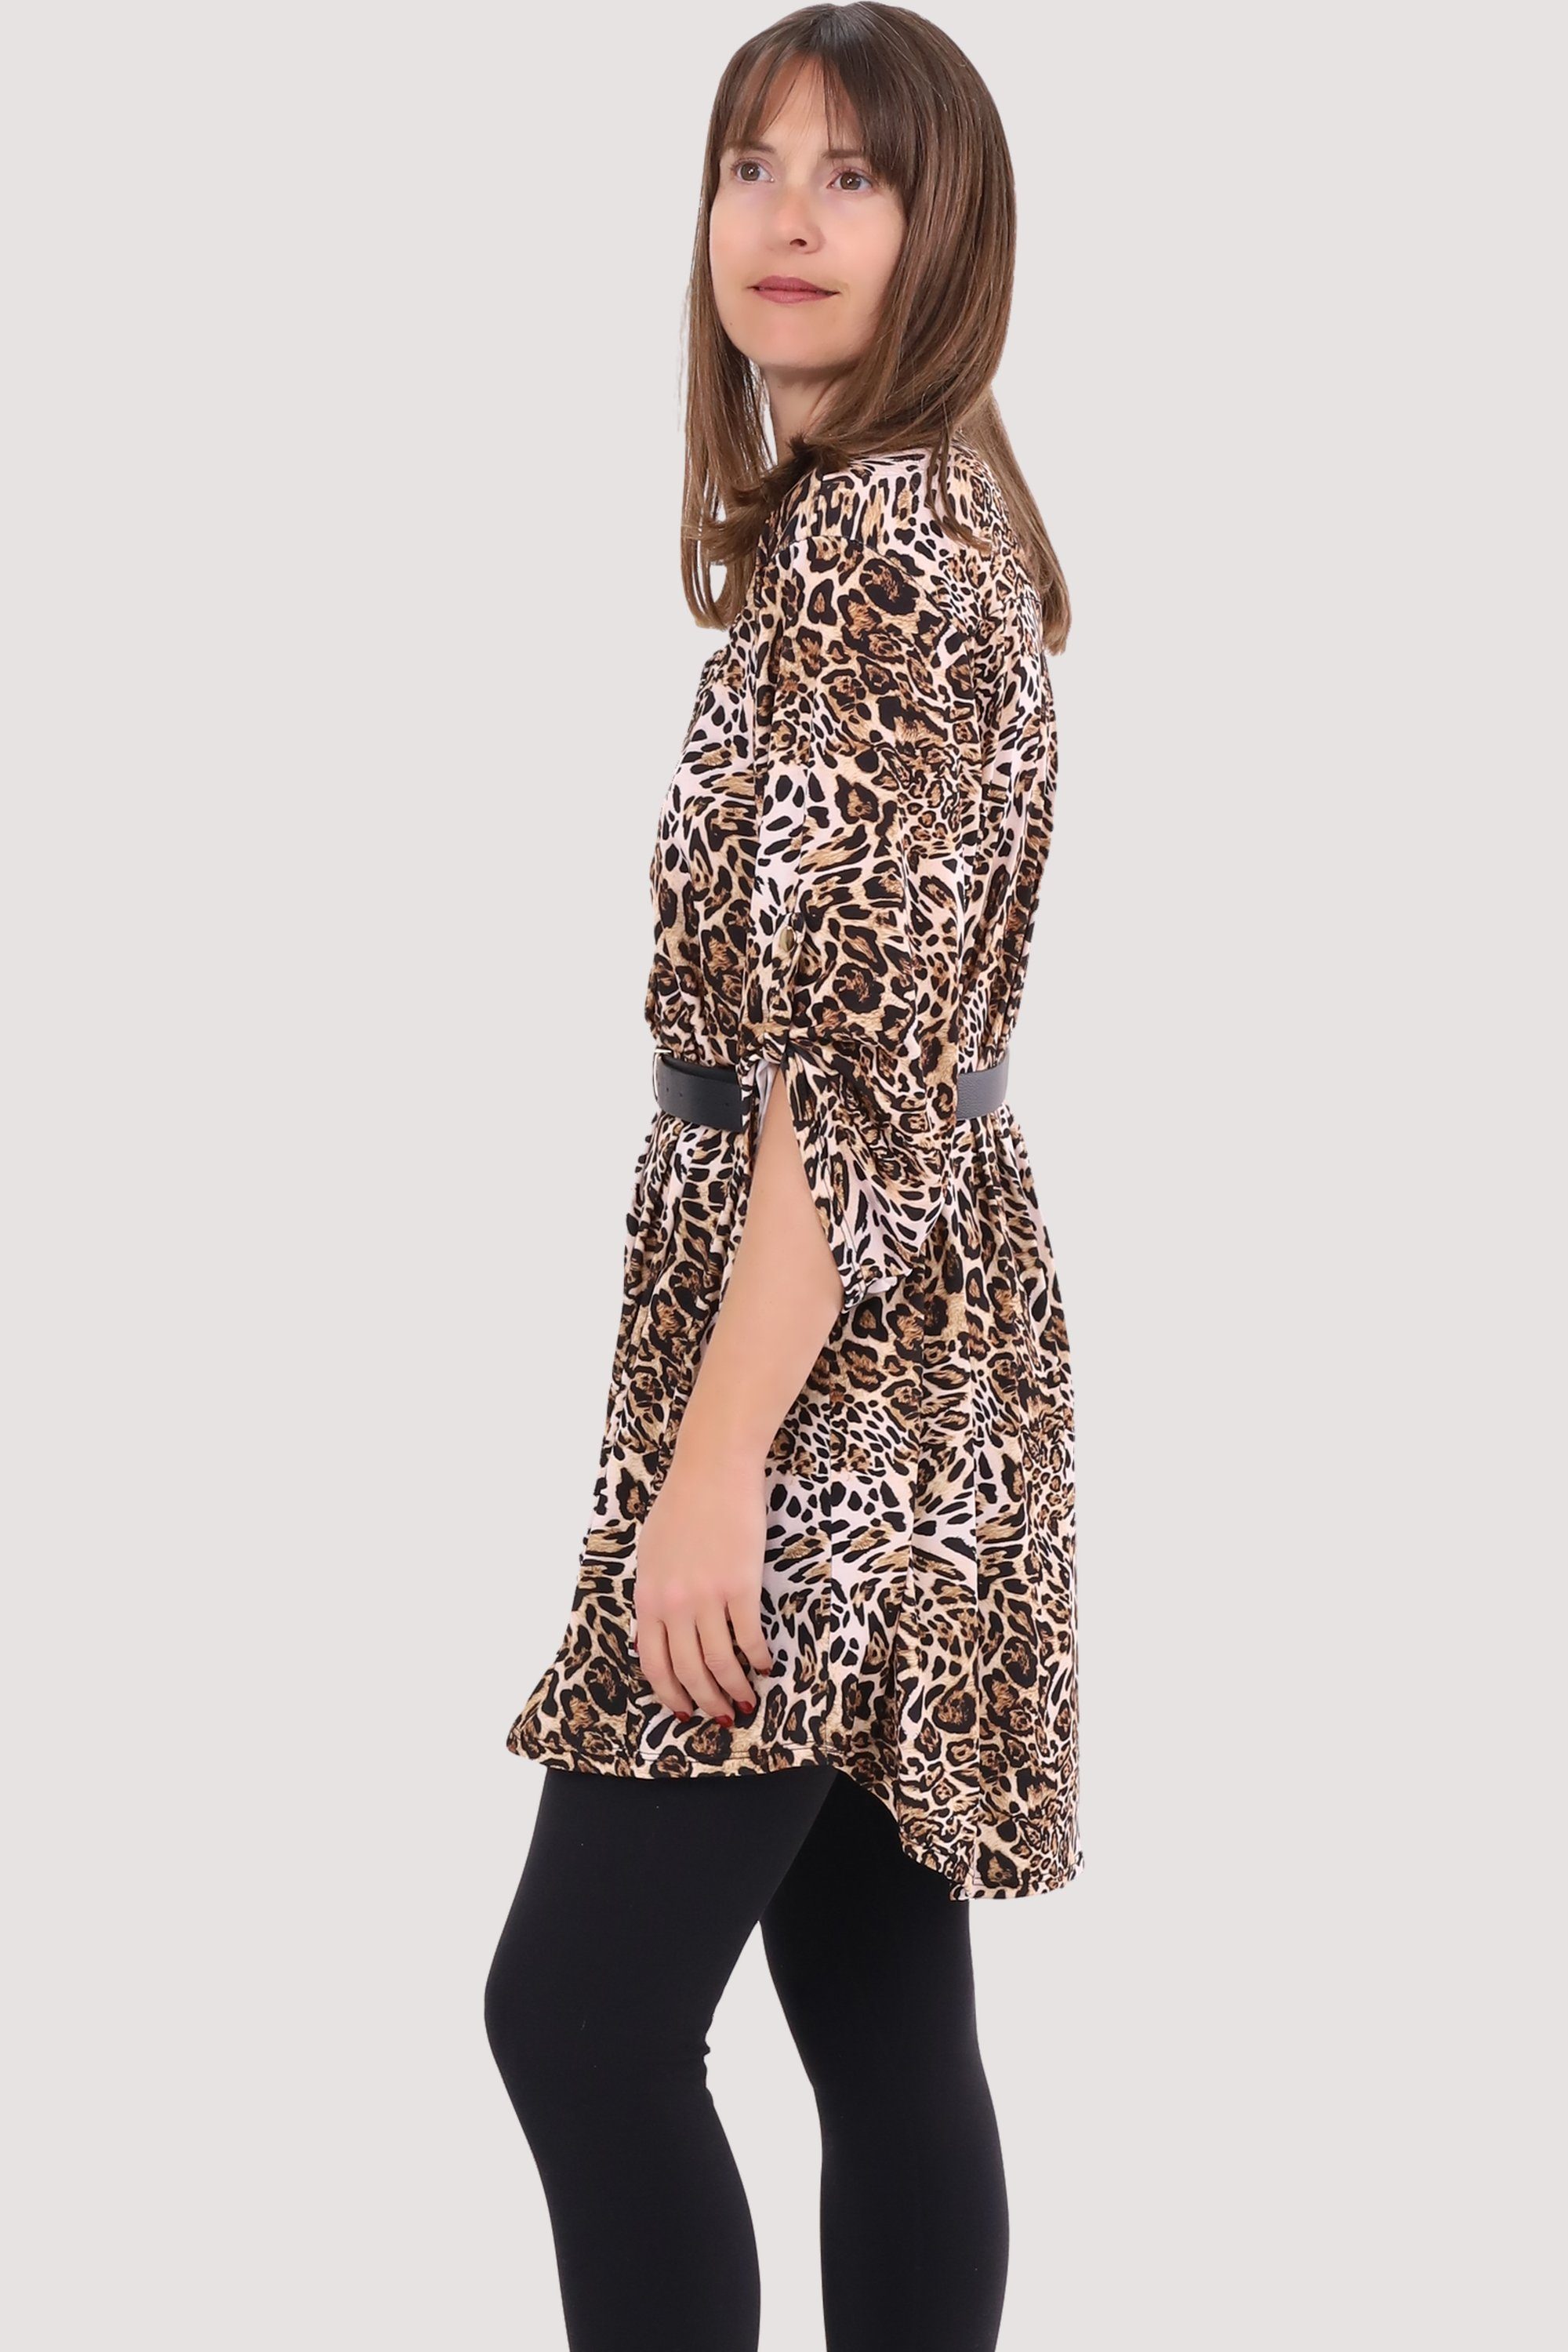 2 Jaguar Bluse Einheitsgröße 23203 mit Kleid Tunika Gürtel more fashion malito than Animalprint Druckkleid